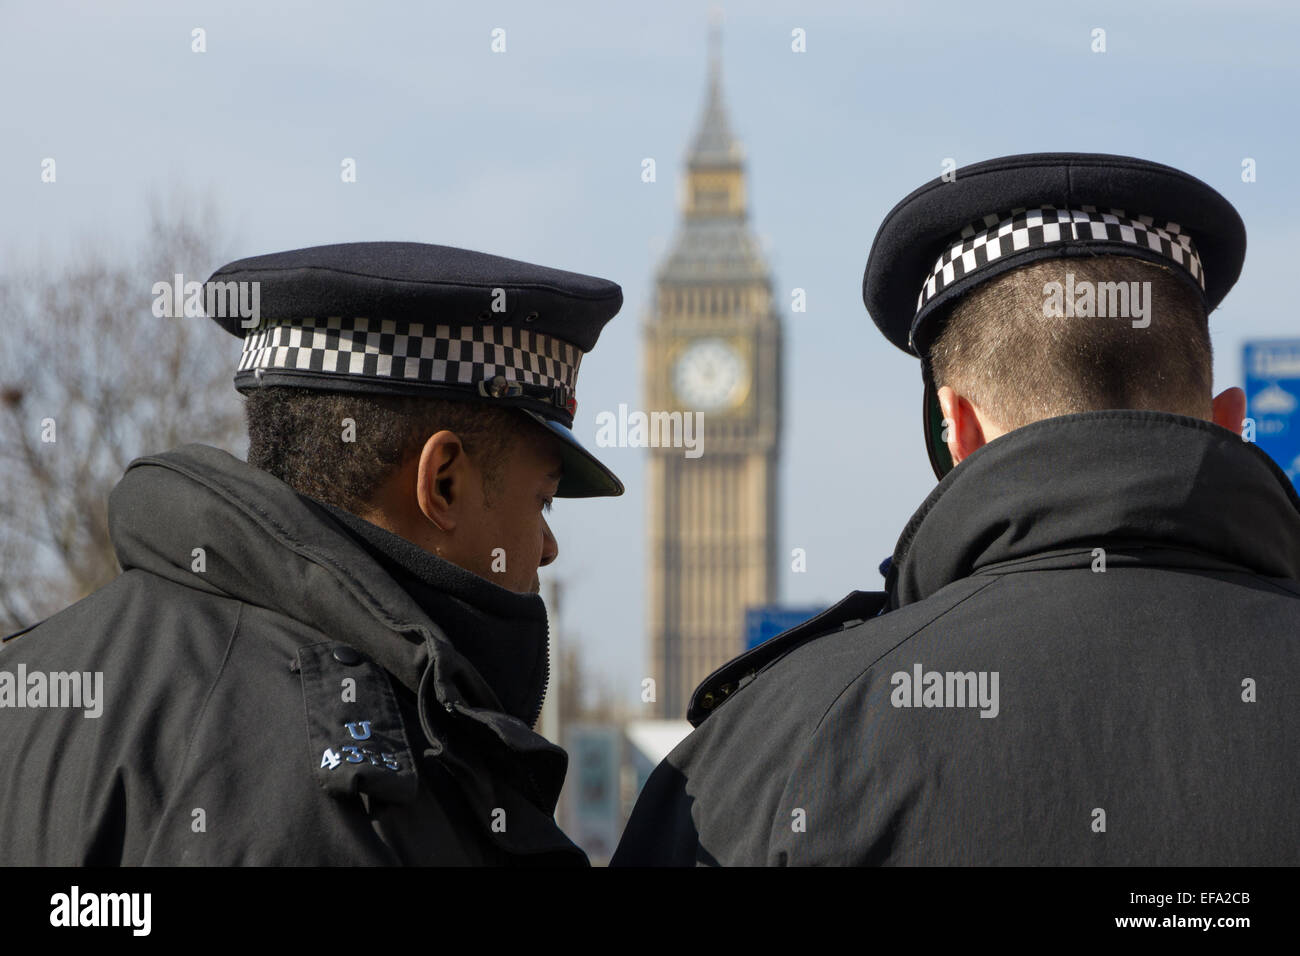 Two London Metropolitan Police Officers overlooking Big Ben Stock Photo